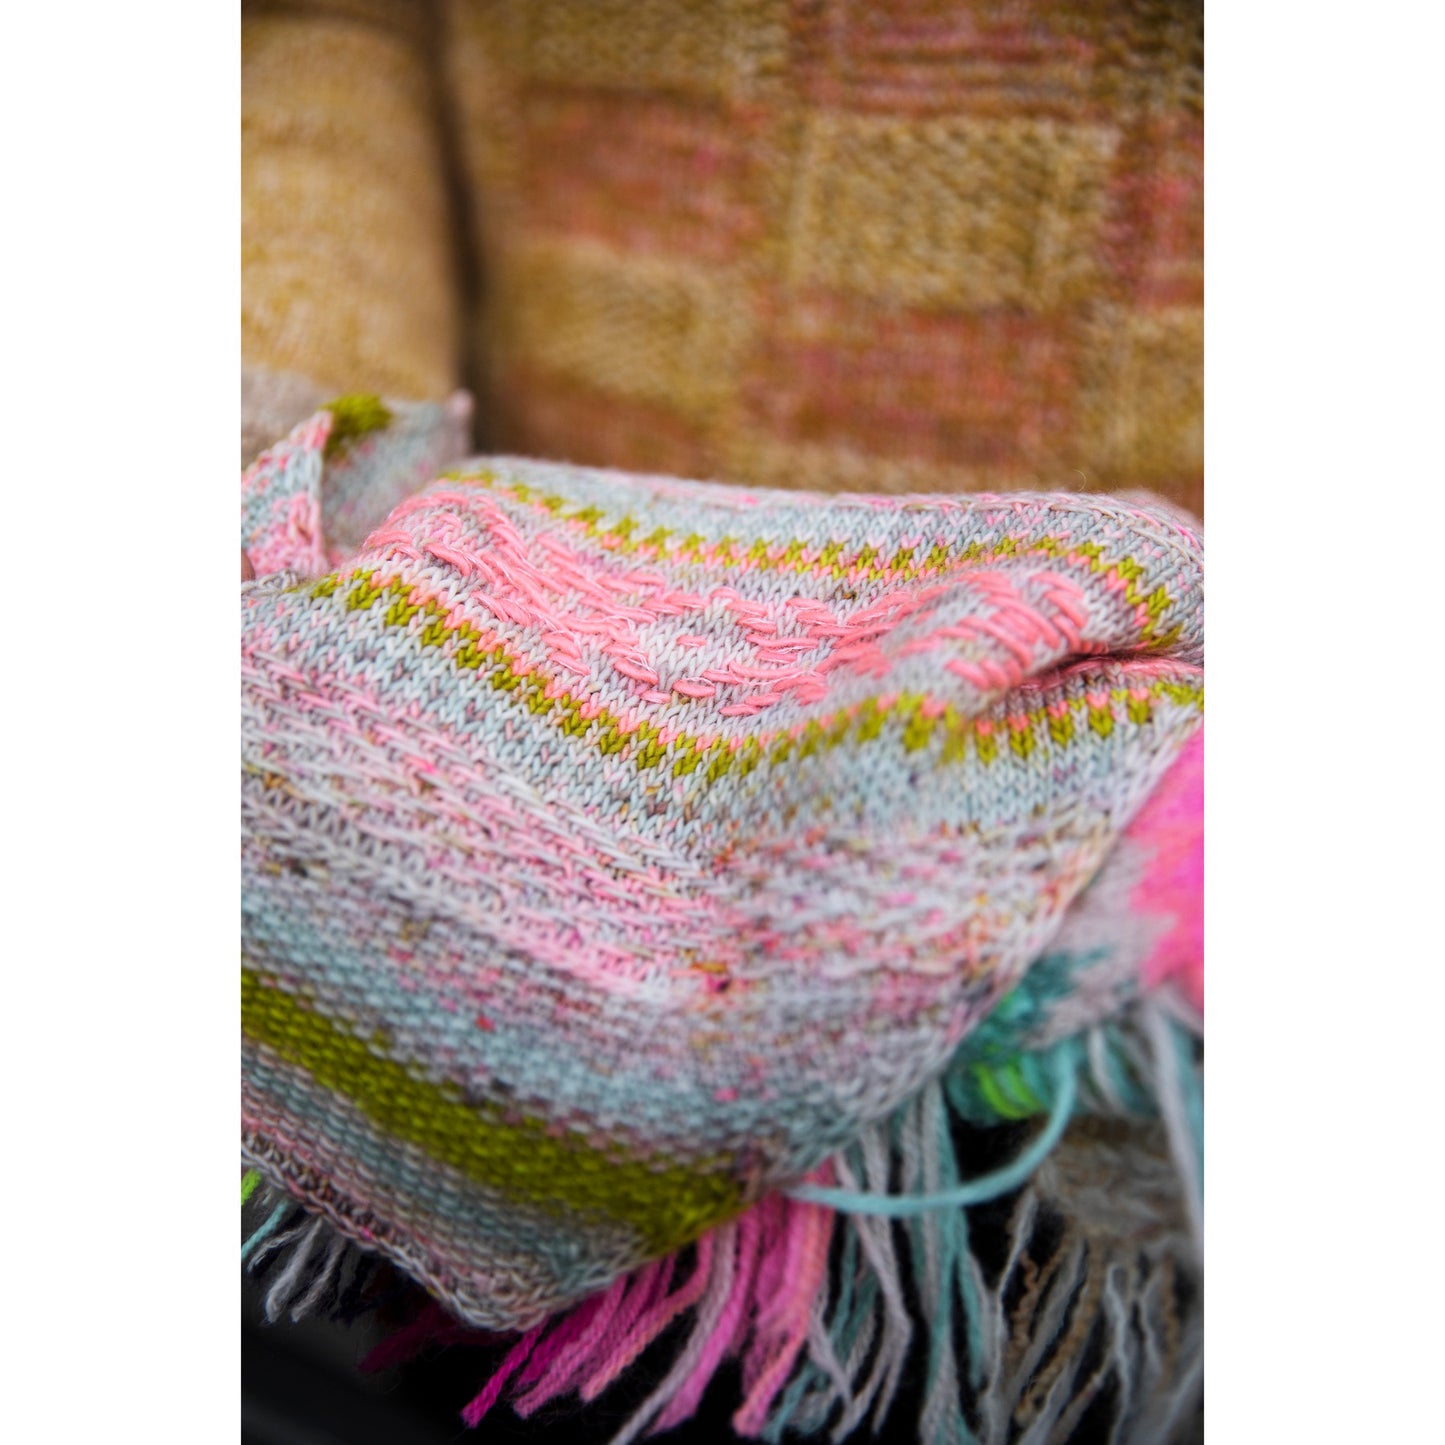 Neons & Neutrals  - a knitwear collection curated by Aimée Gille of La Bien Aimée